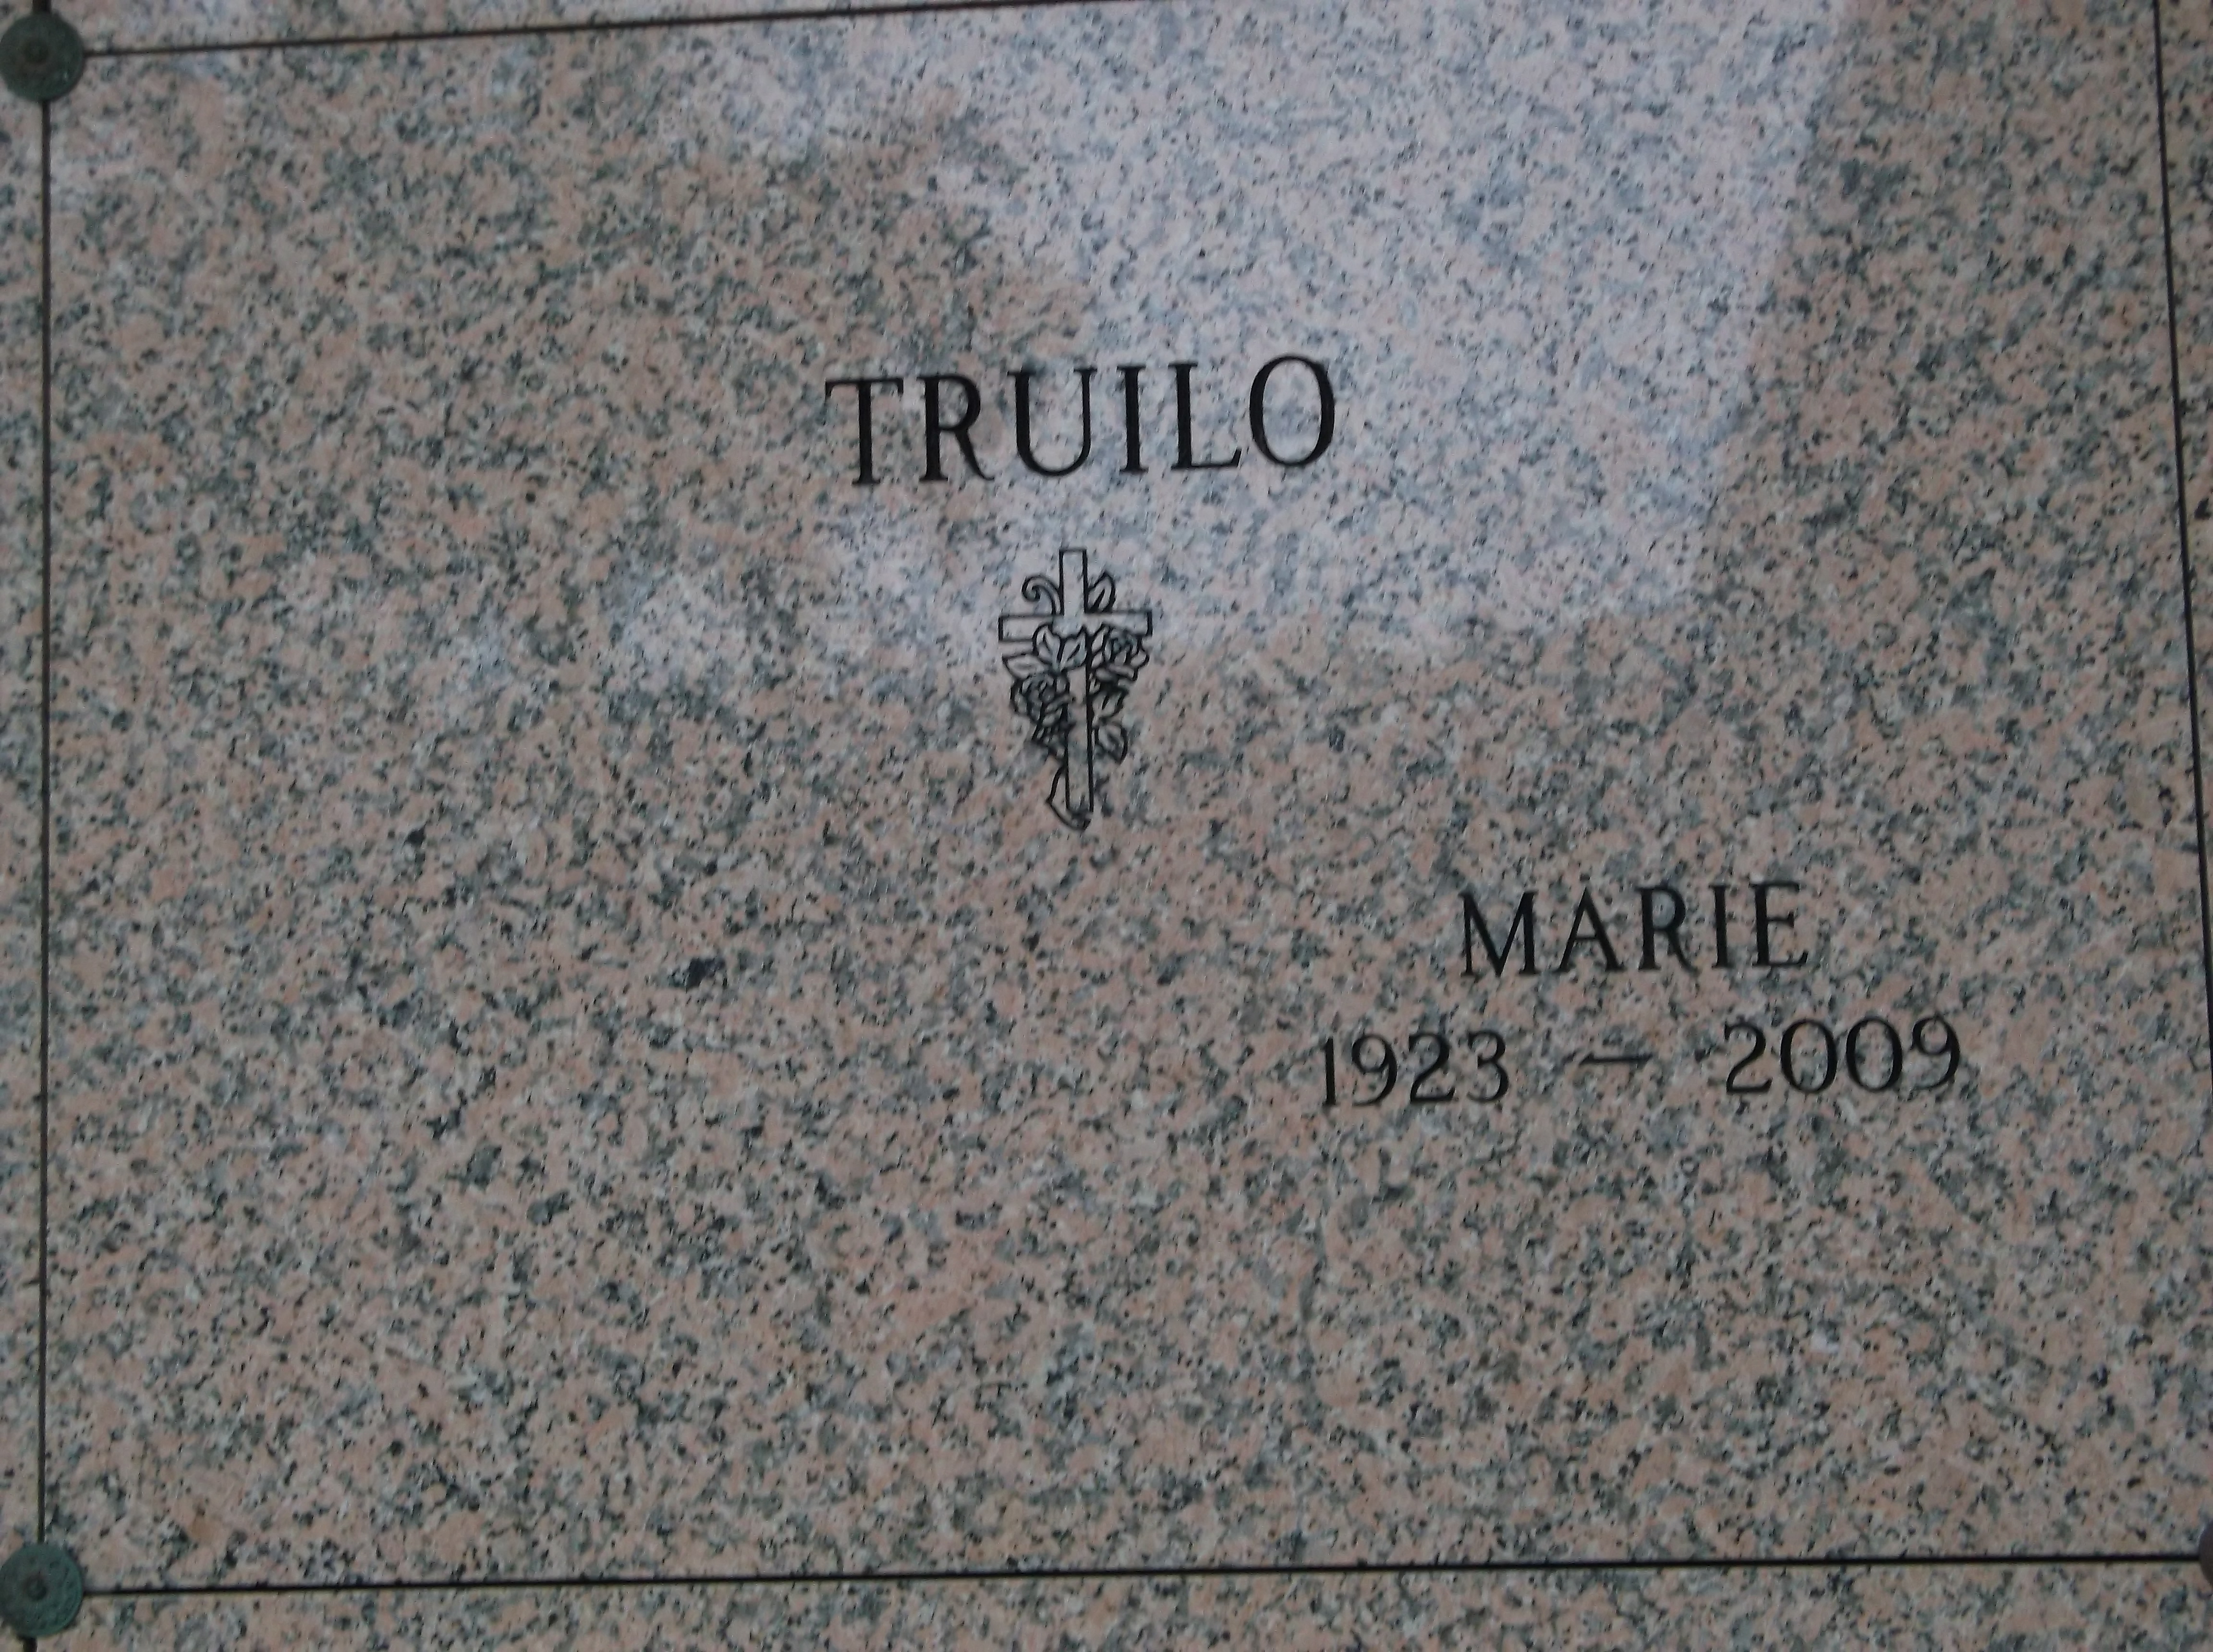 Marie Truilo